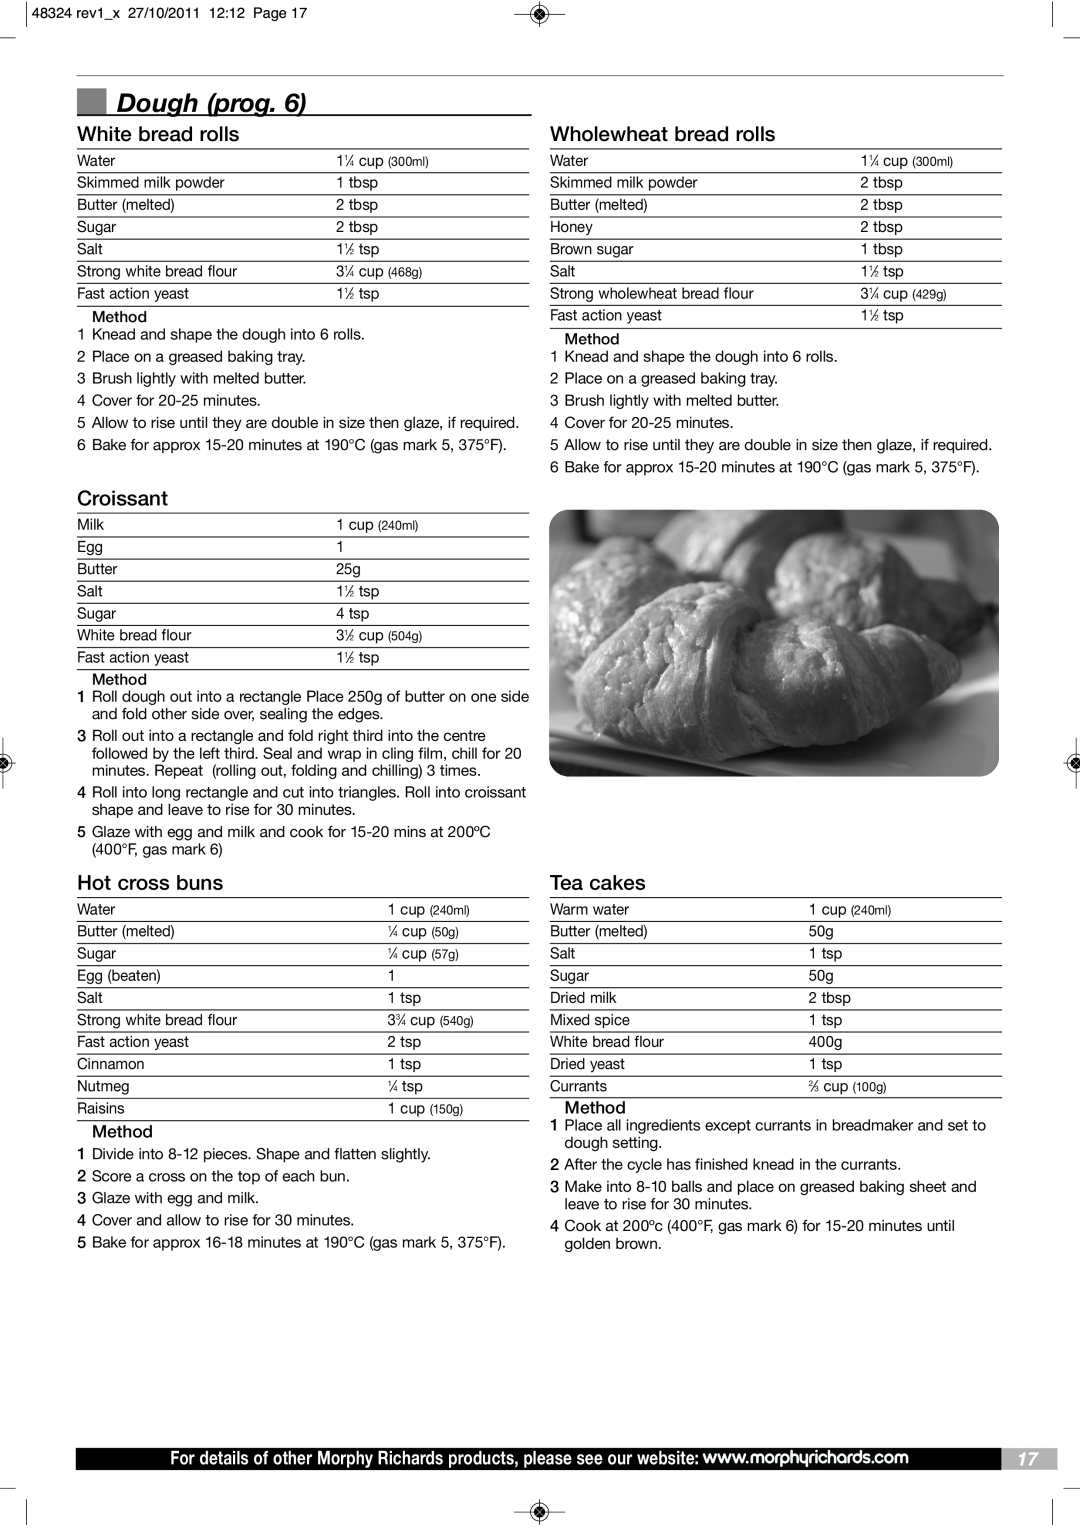 Morphy Richards BM48324 manual Dough prog, White bread rolls, Wholewheat bread rolls, Croissant, Hot cross buns, Tea cakes 